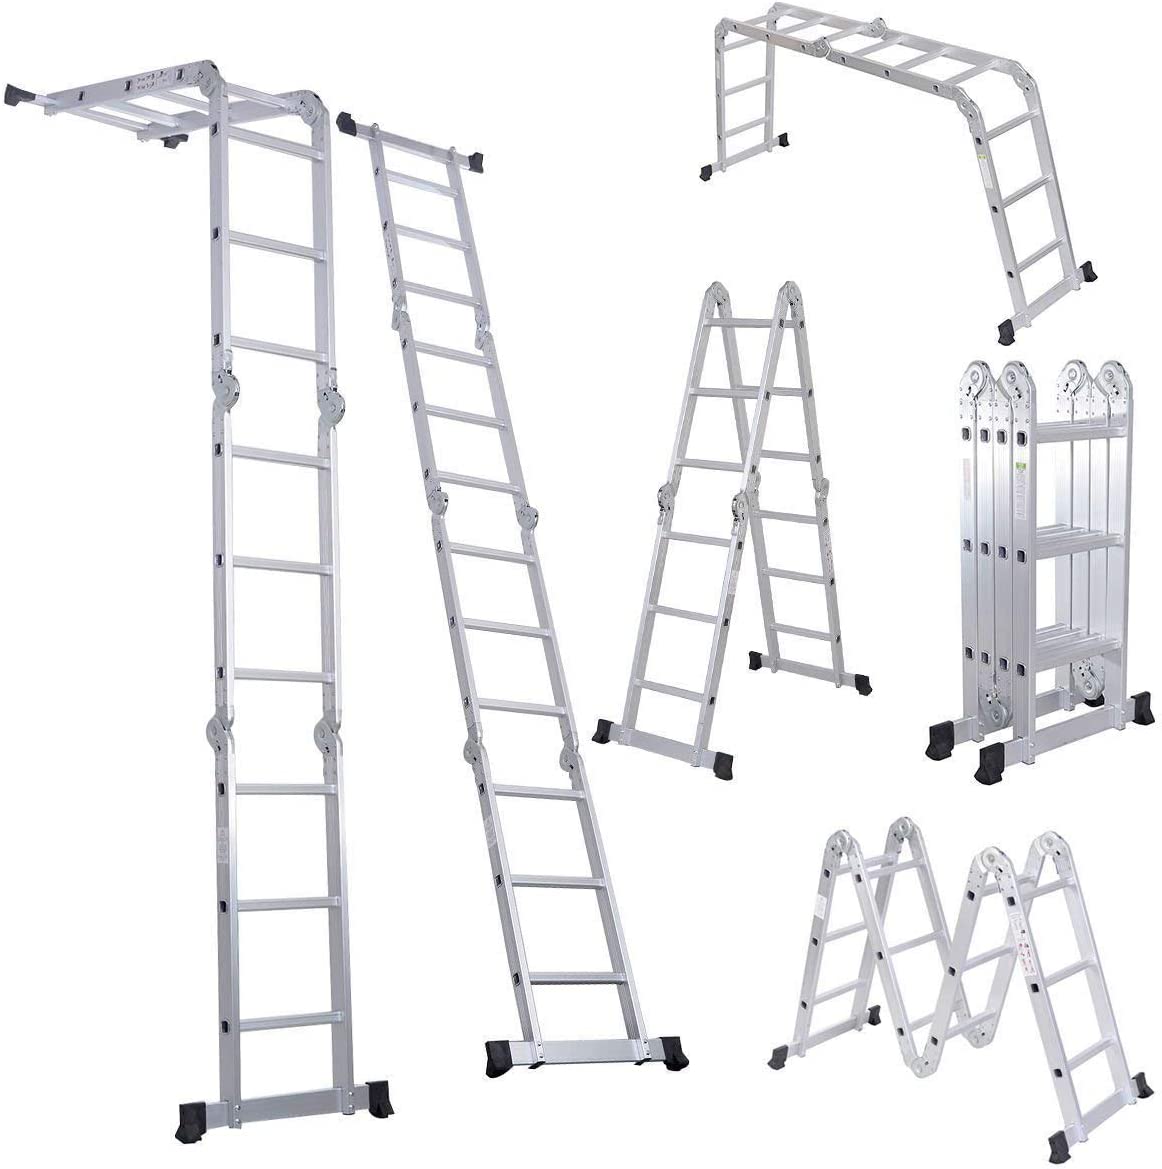 LUISLADDERS Folding Ladder Multi-Purpose Aluminium [...]